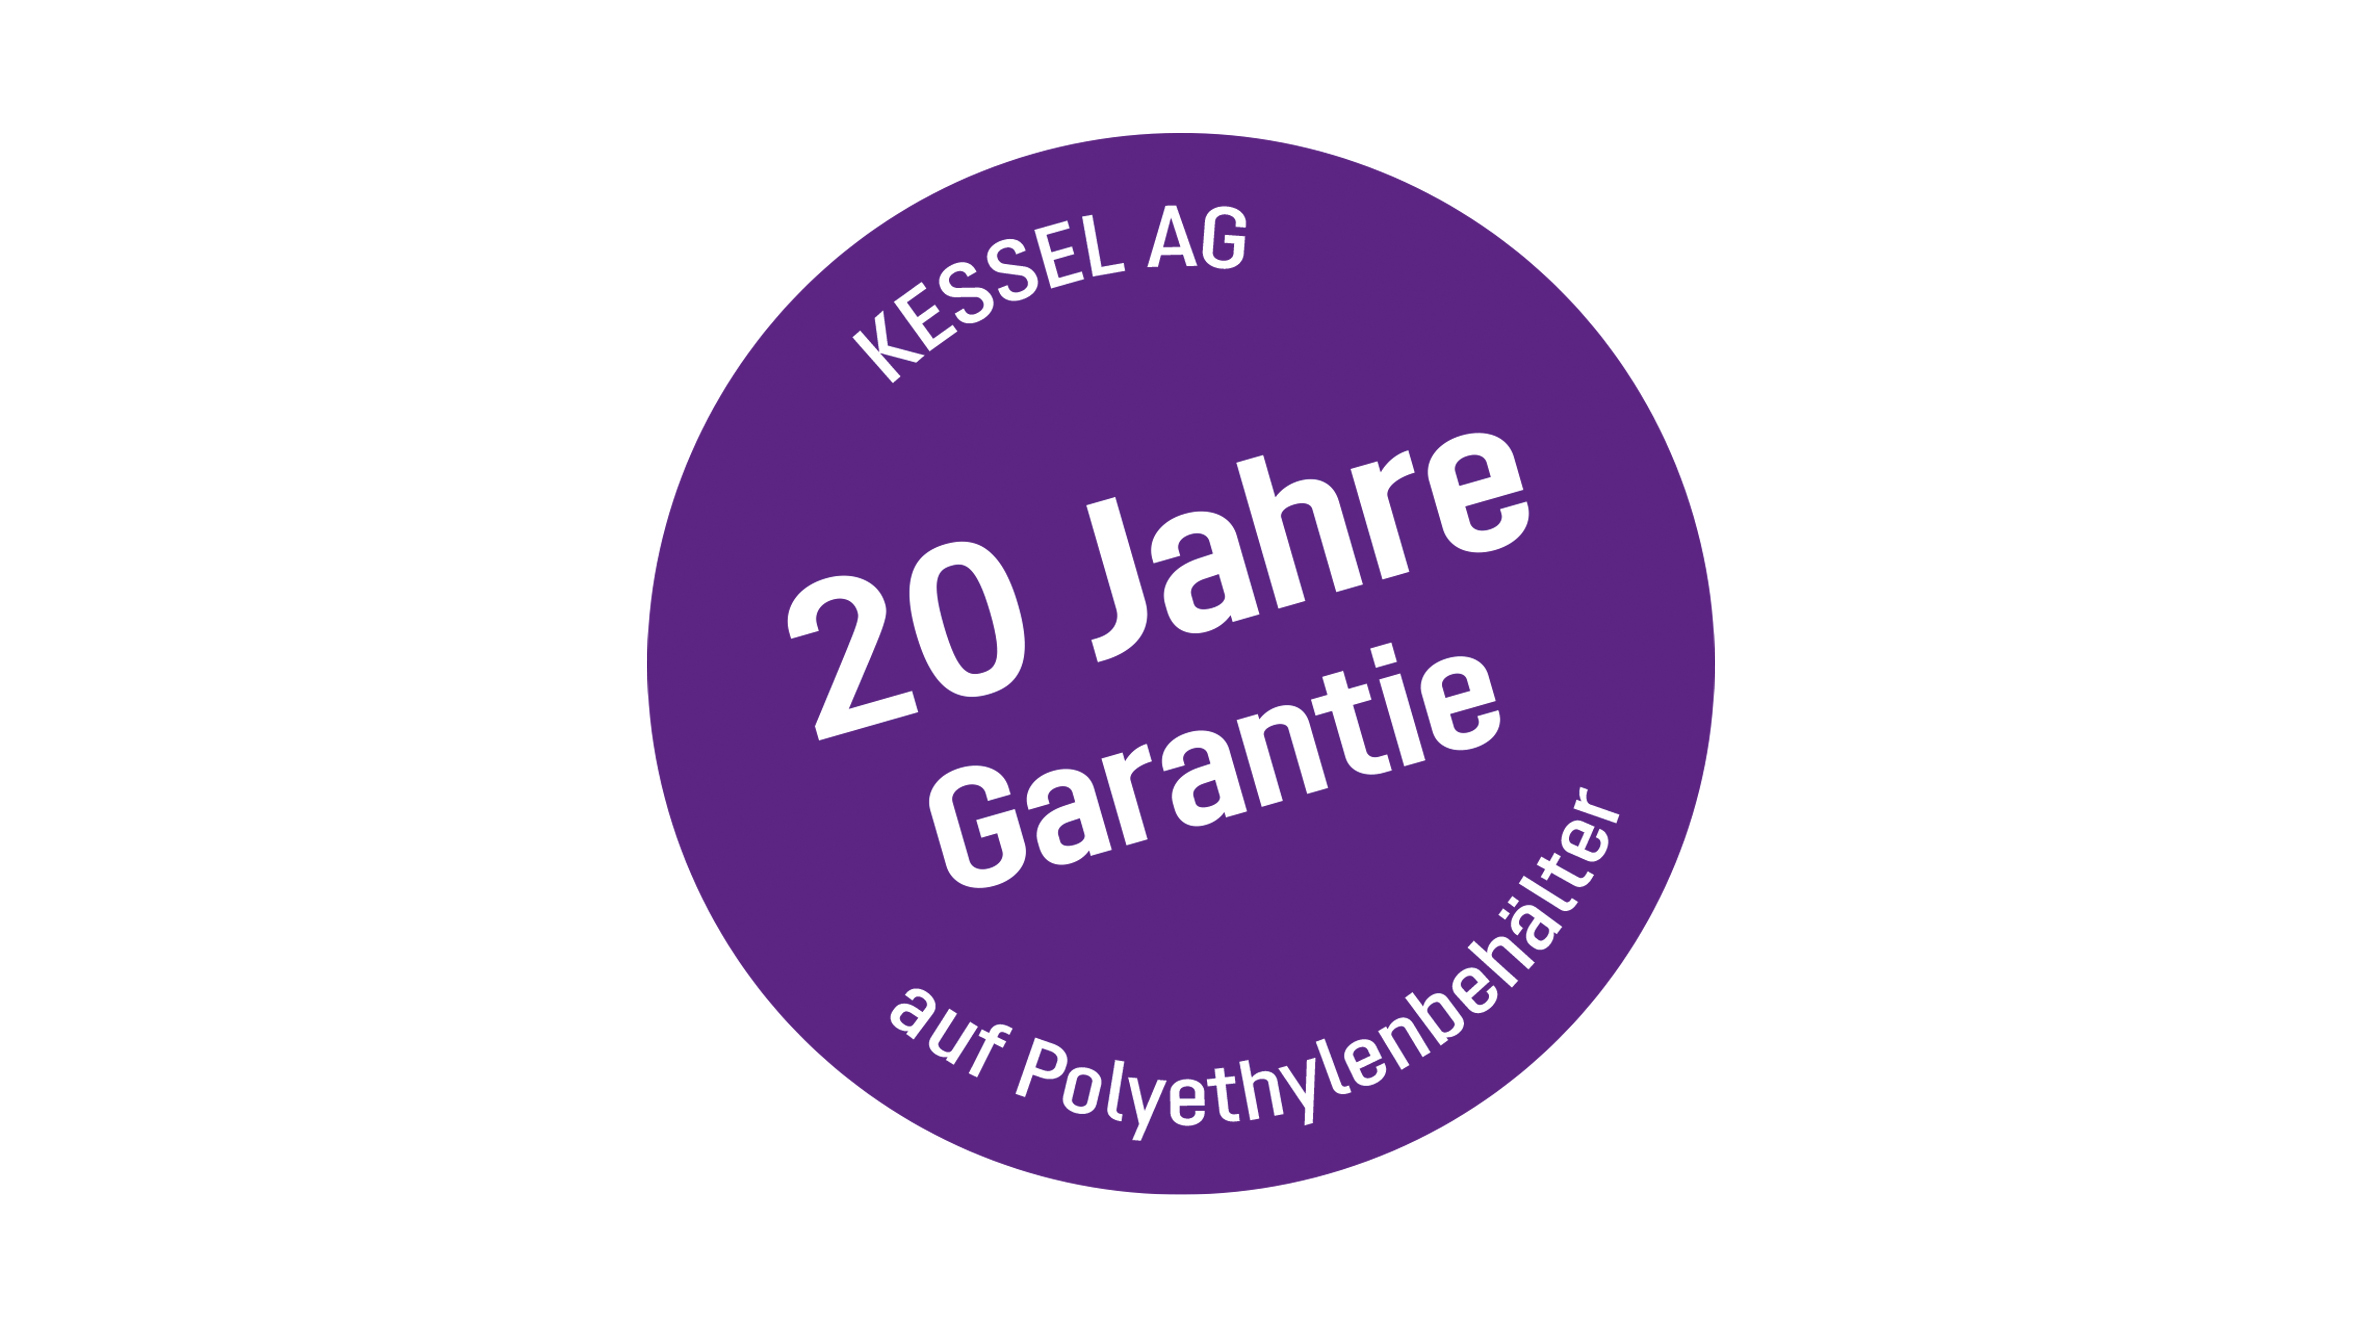 20-year guarantee made of polyethylene